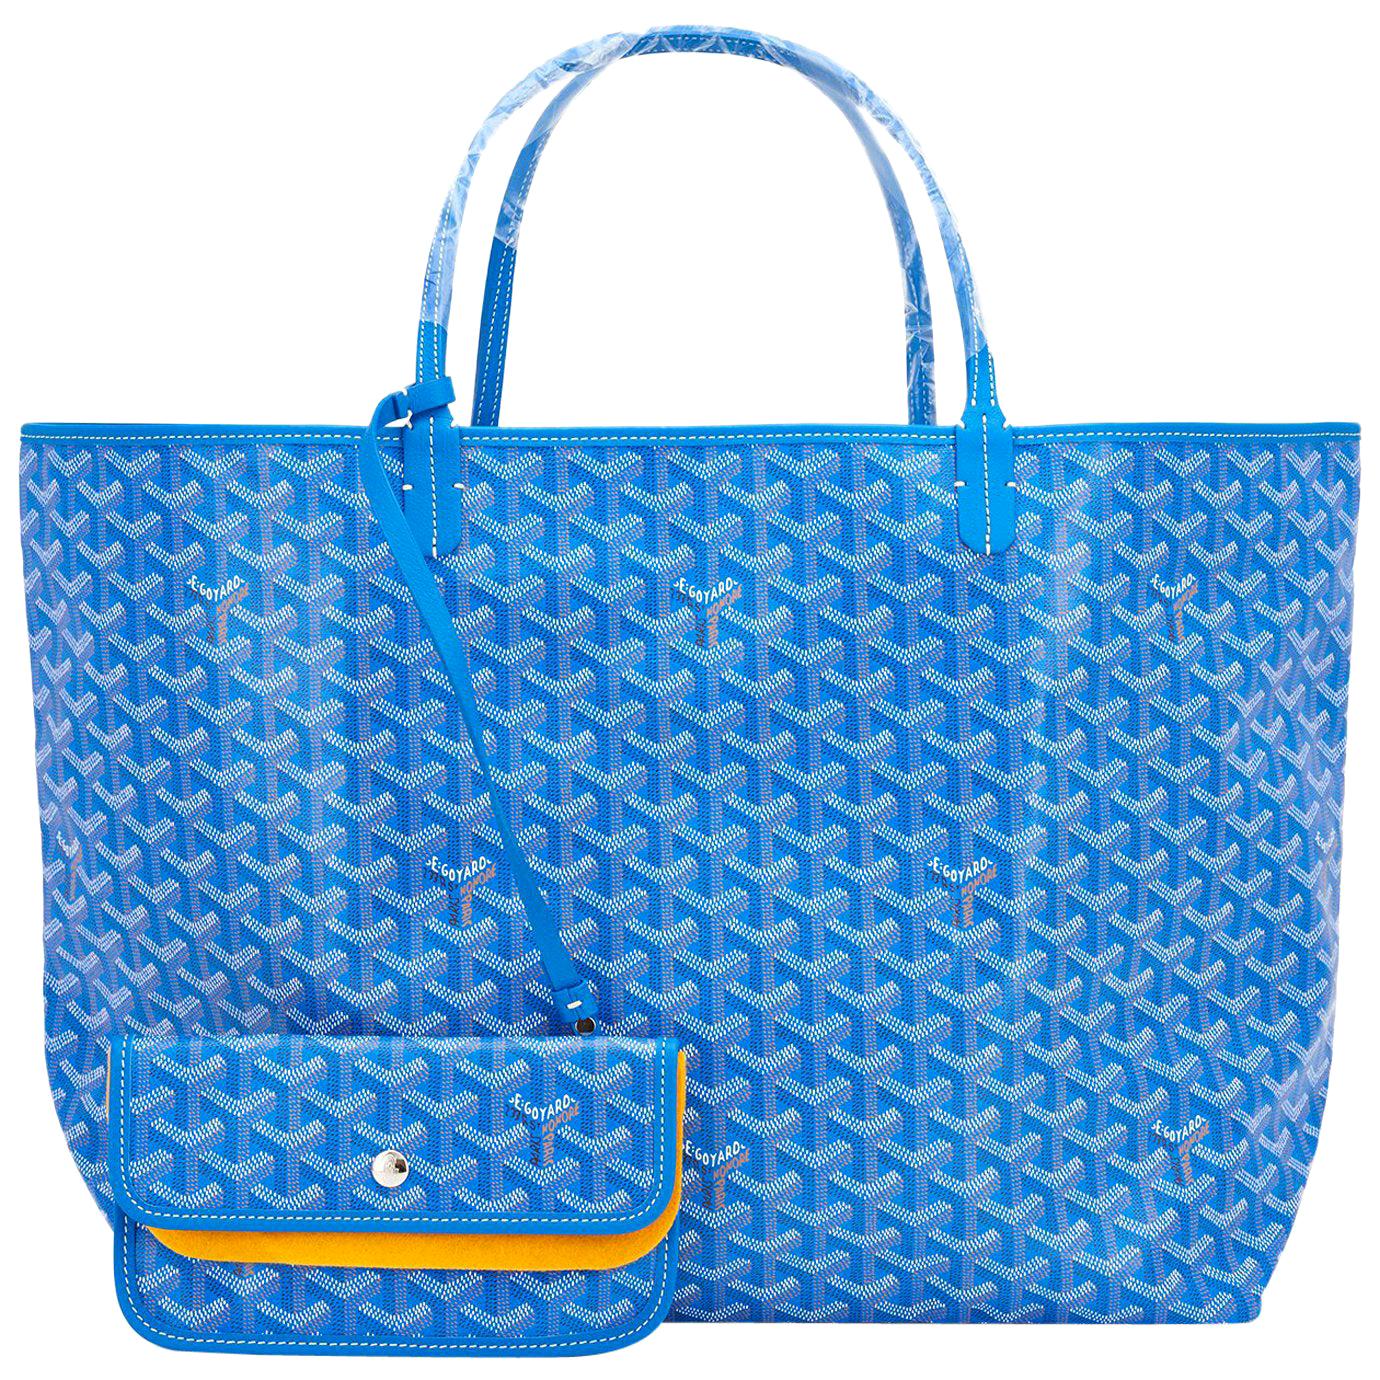 Chelsea Handler travels with a Goyard tote bag - PurseBlog